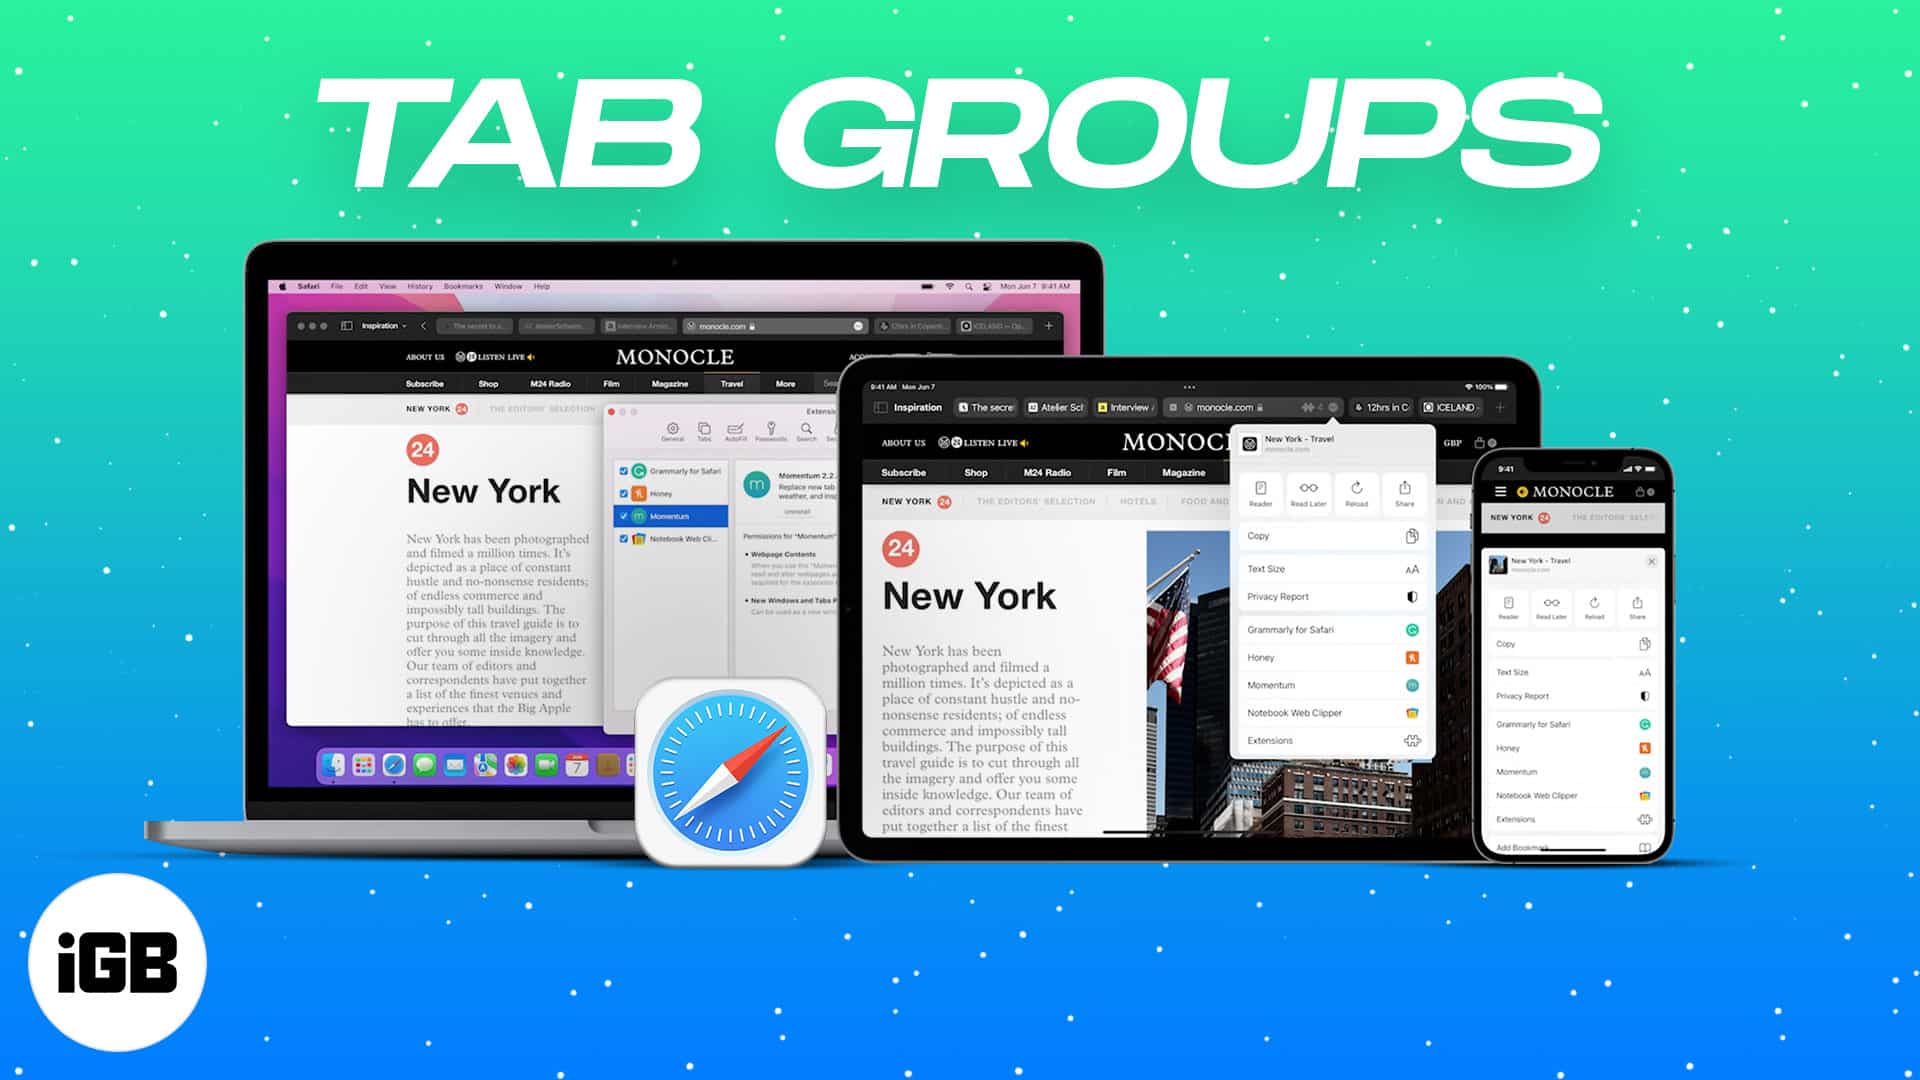 safari tab groups on ipad